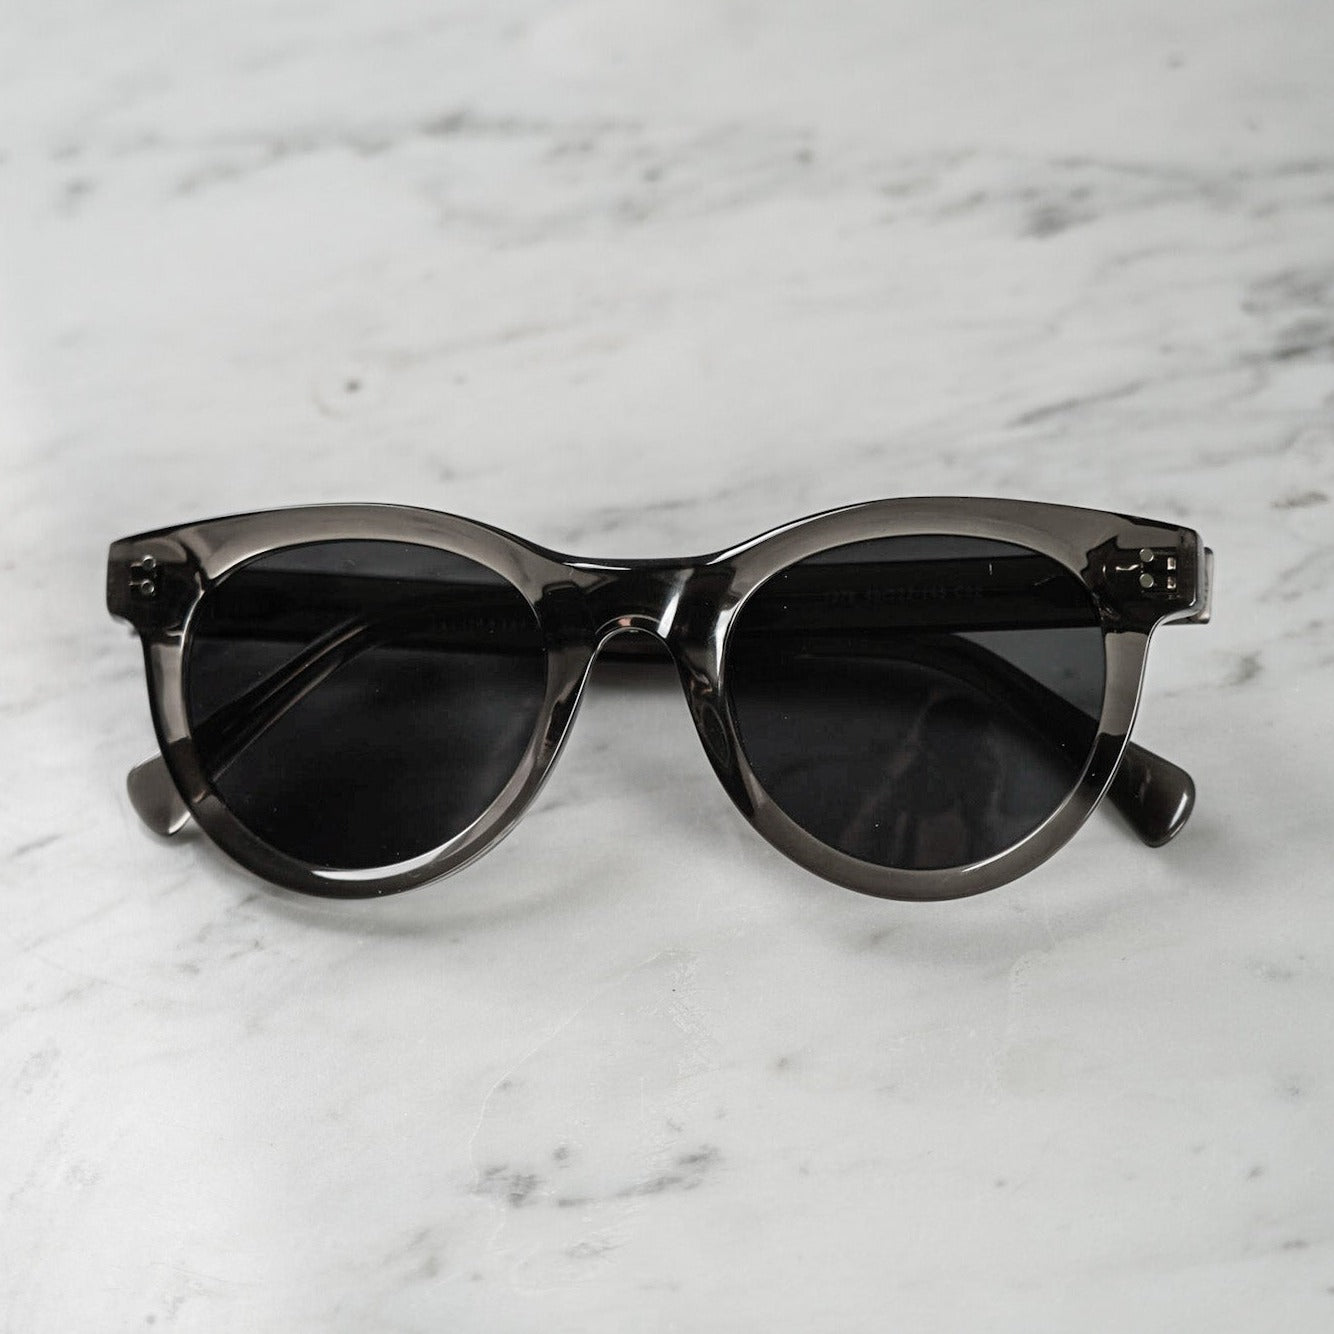 Classic sunglasses - Transparent grey